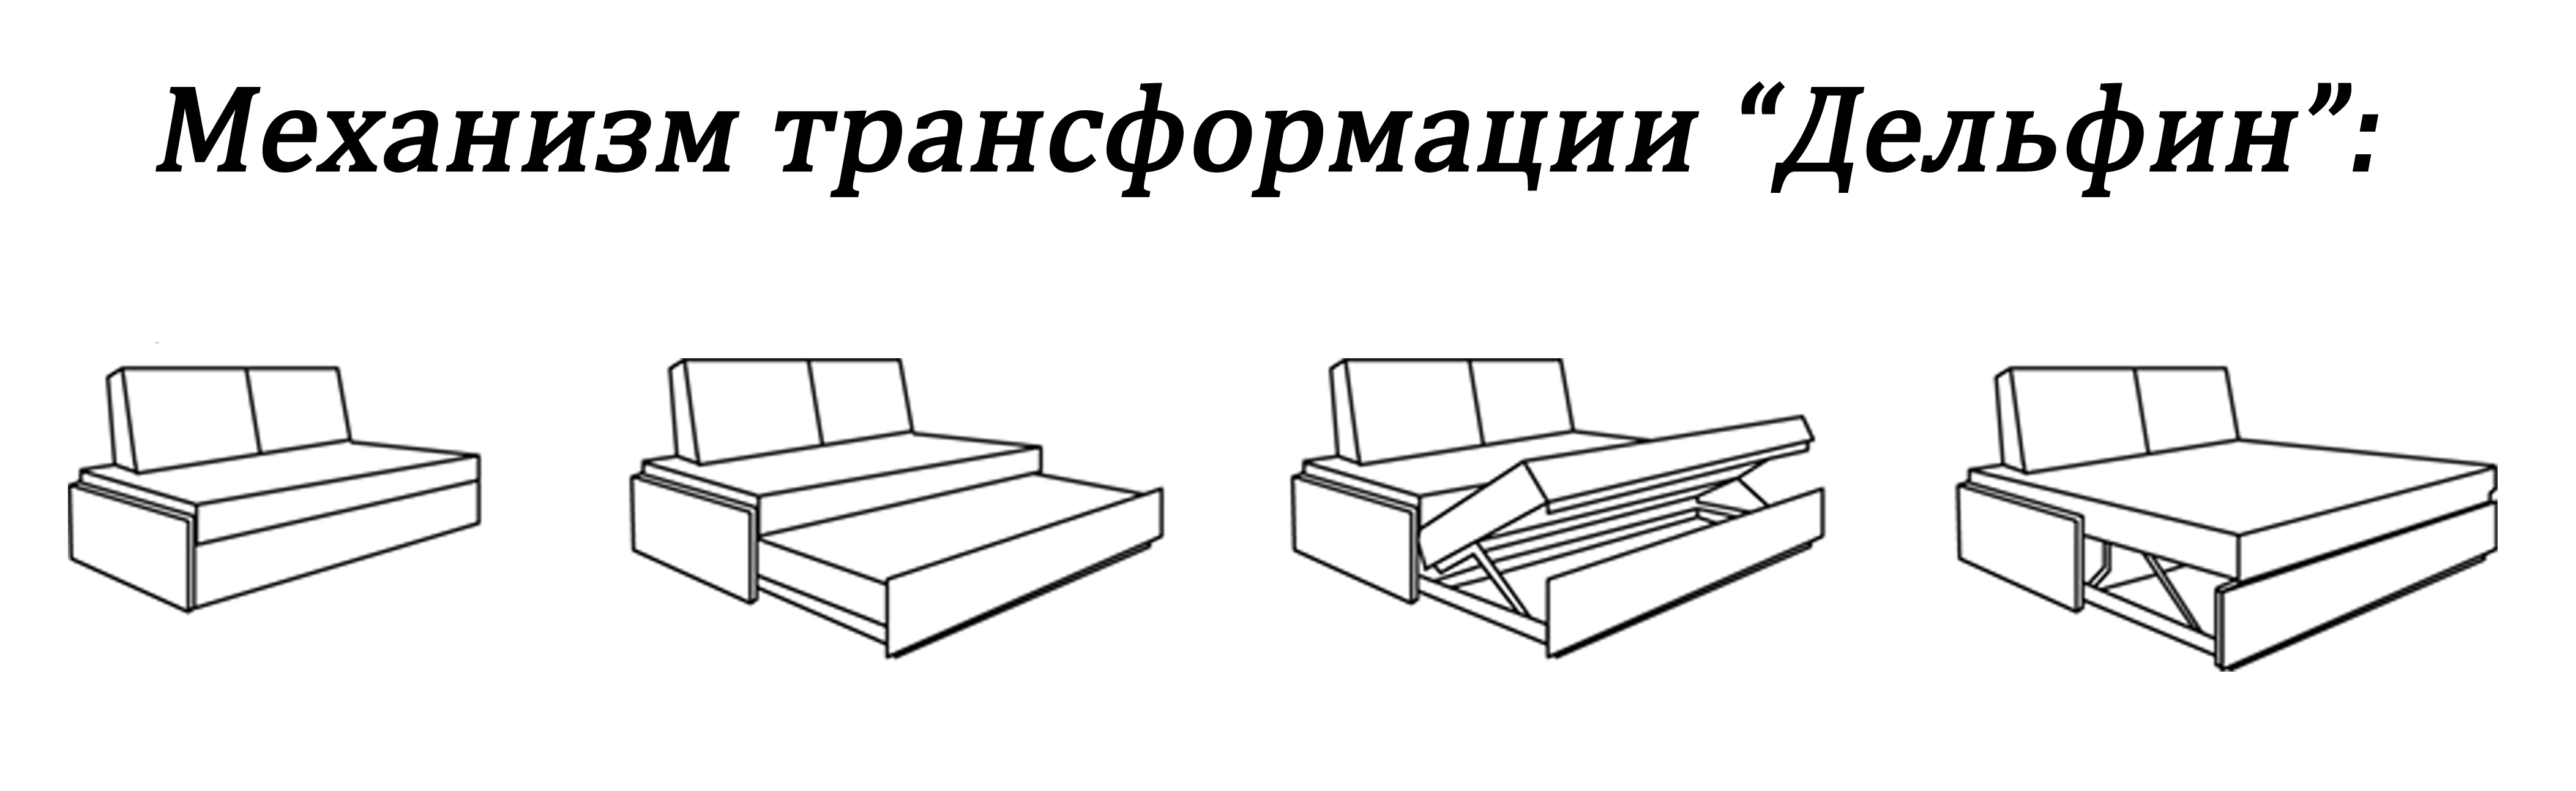 Схема механизма "Дельфин" дивана